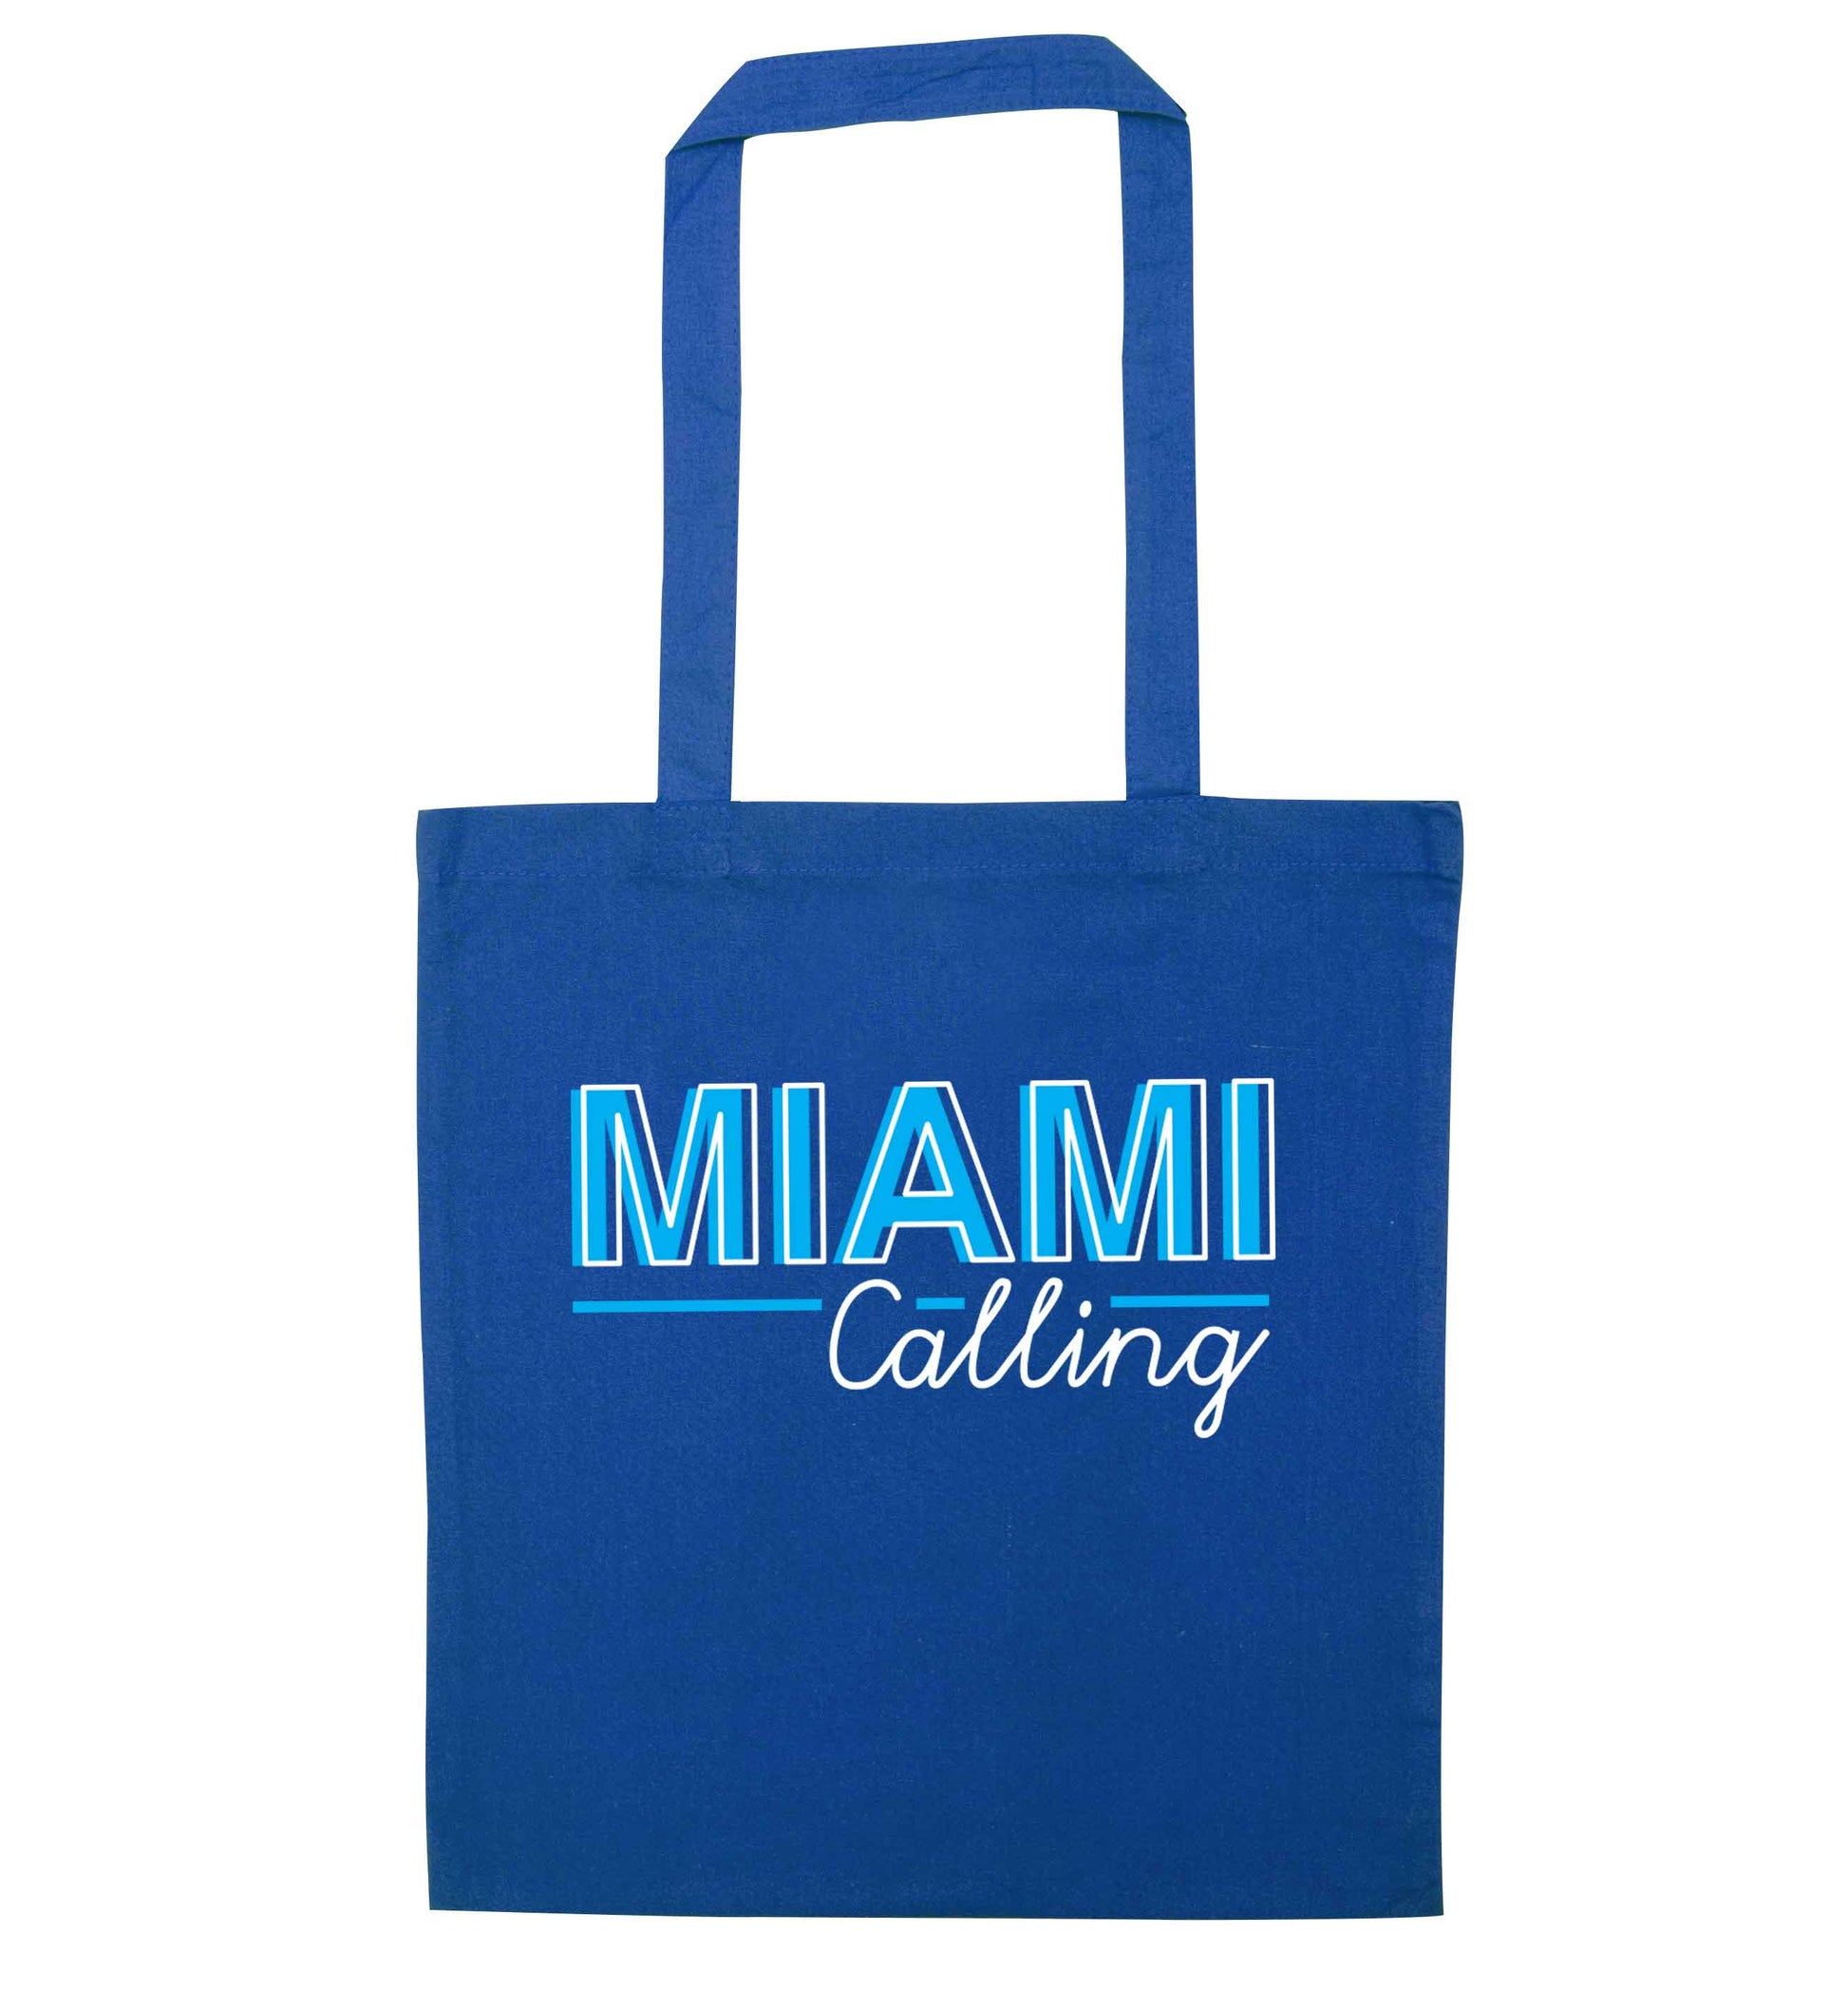 Miami calling blue tote bag